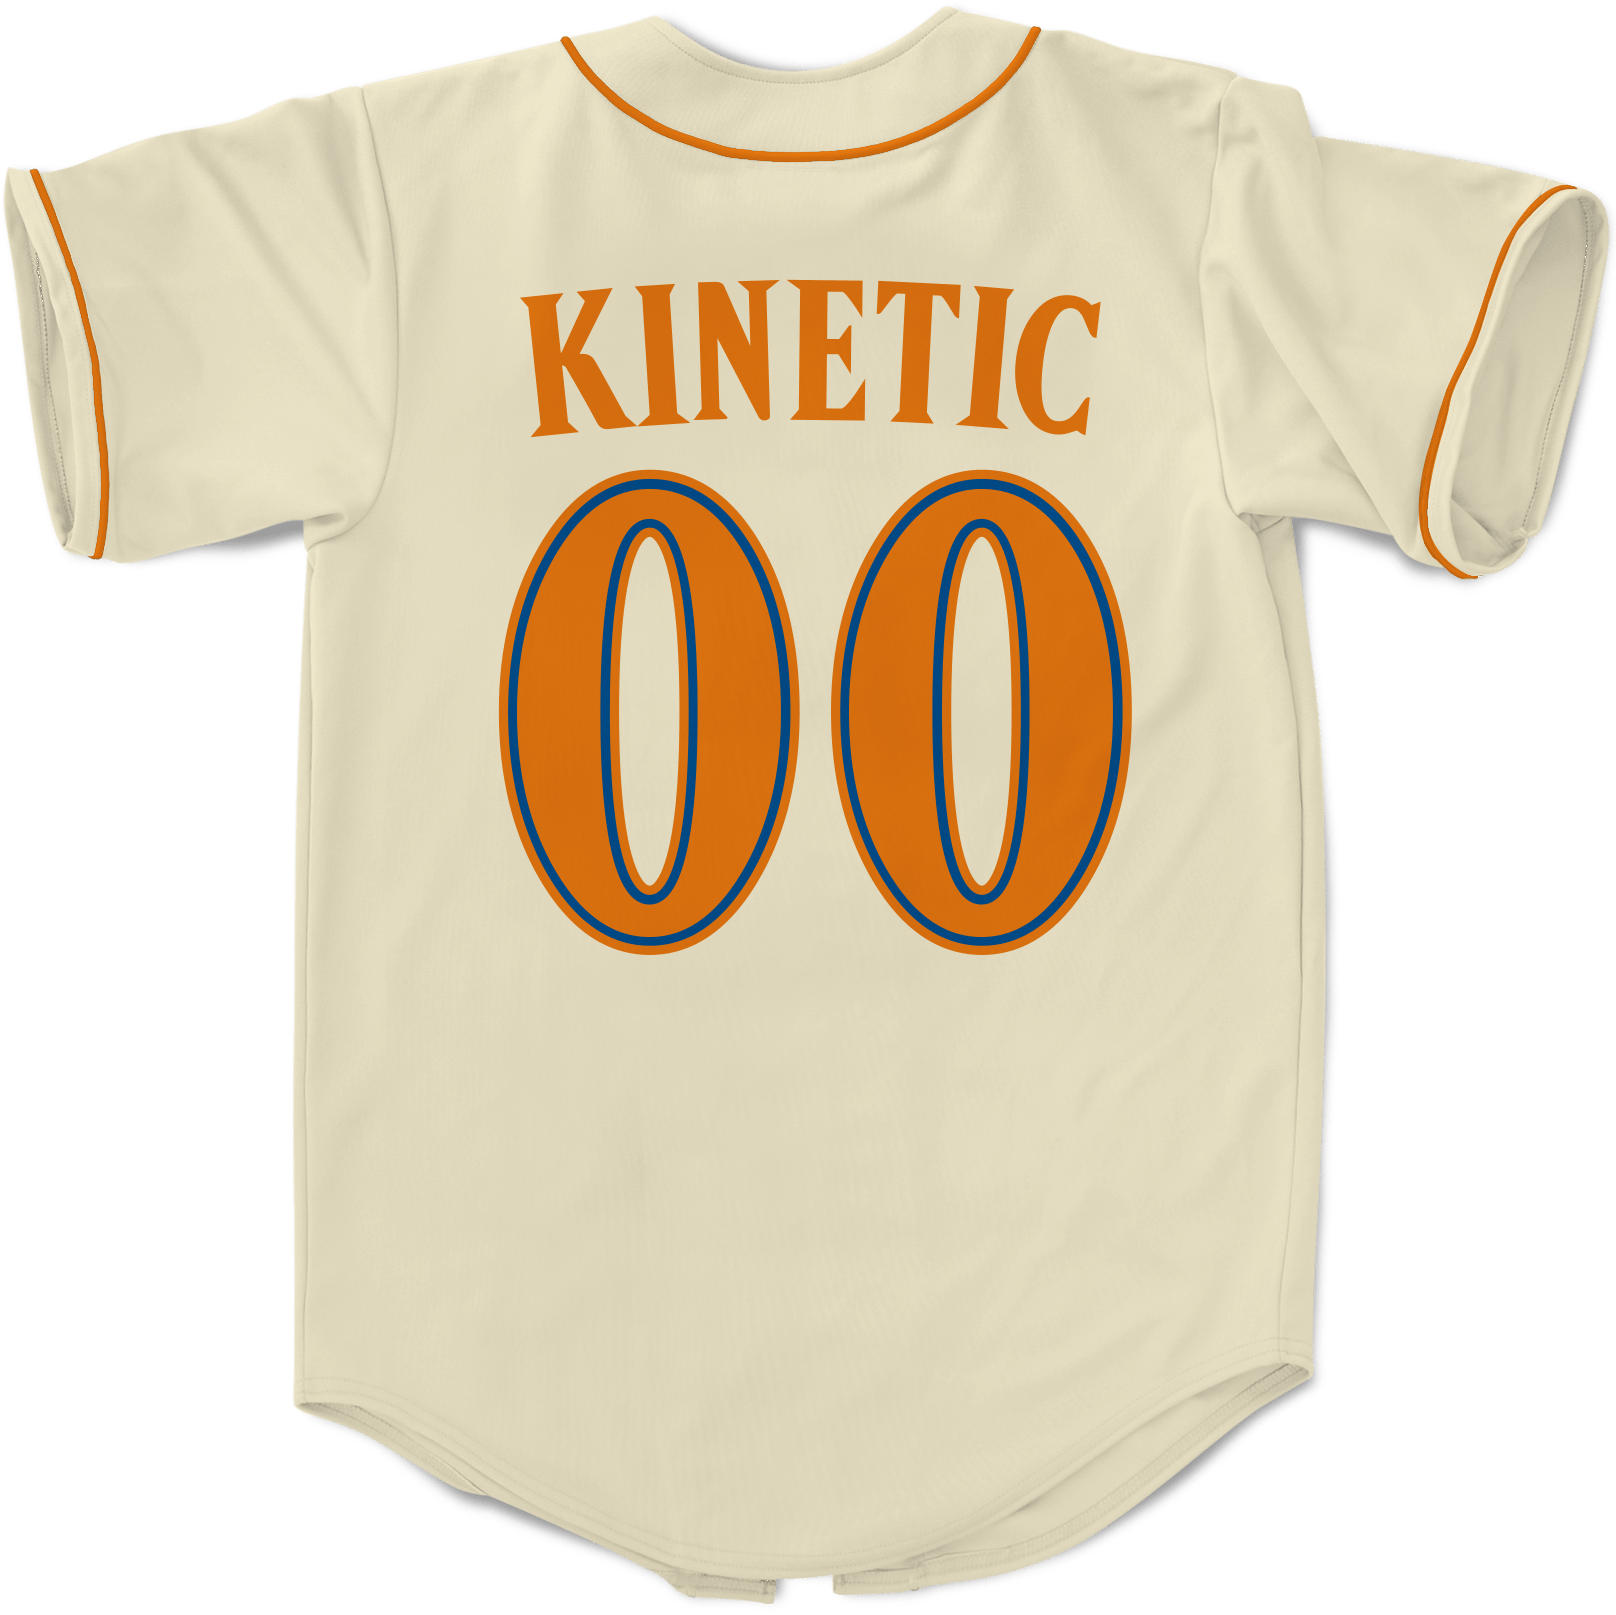 Kappa Delta Rho - Cream Baseball Jersey Premium Baseball Kinetic Society LLC 